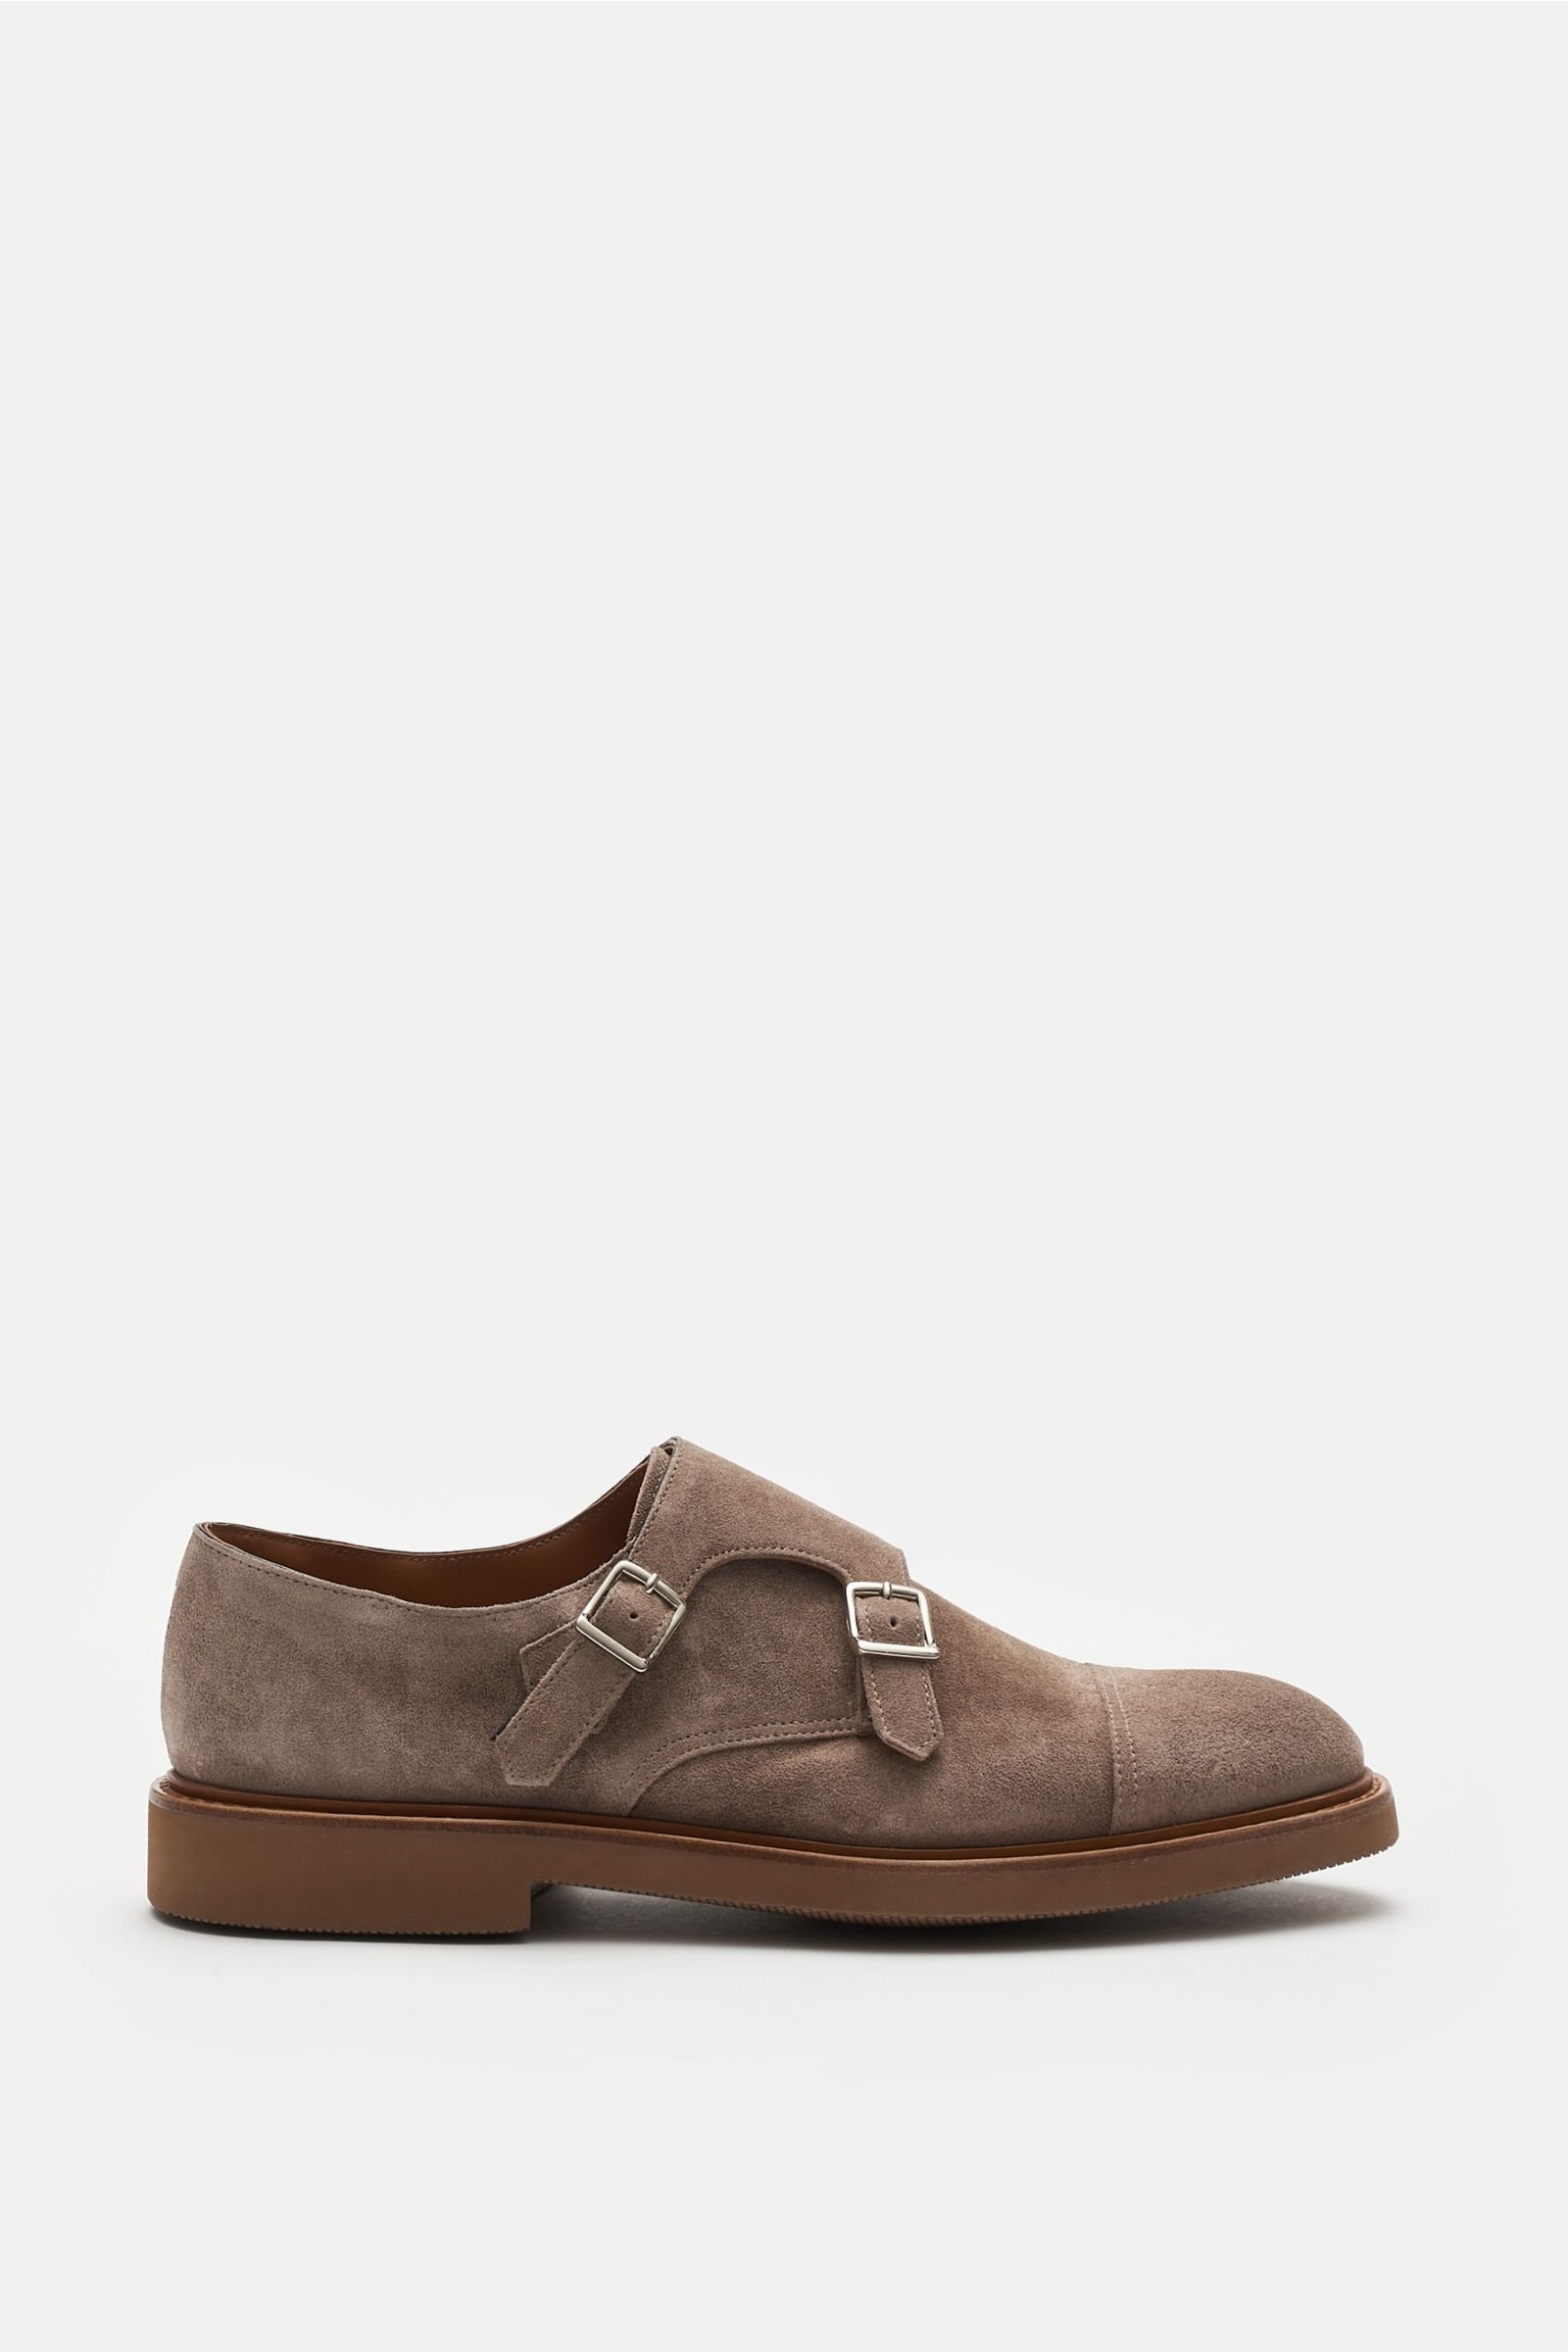 Double monk shoes 'Lambuy' grey-brown